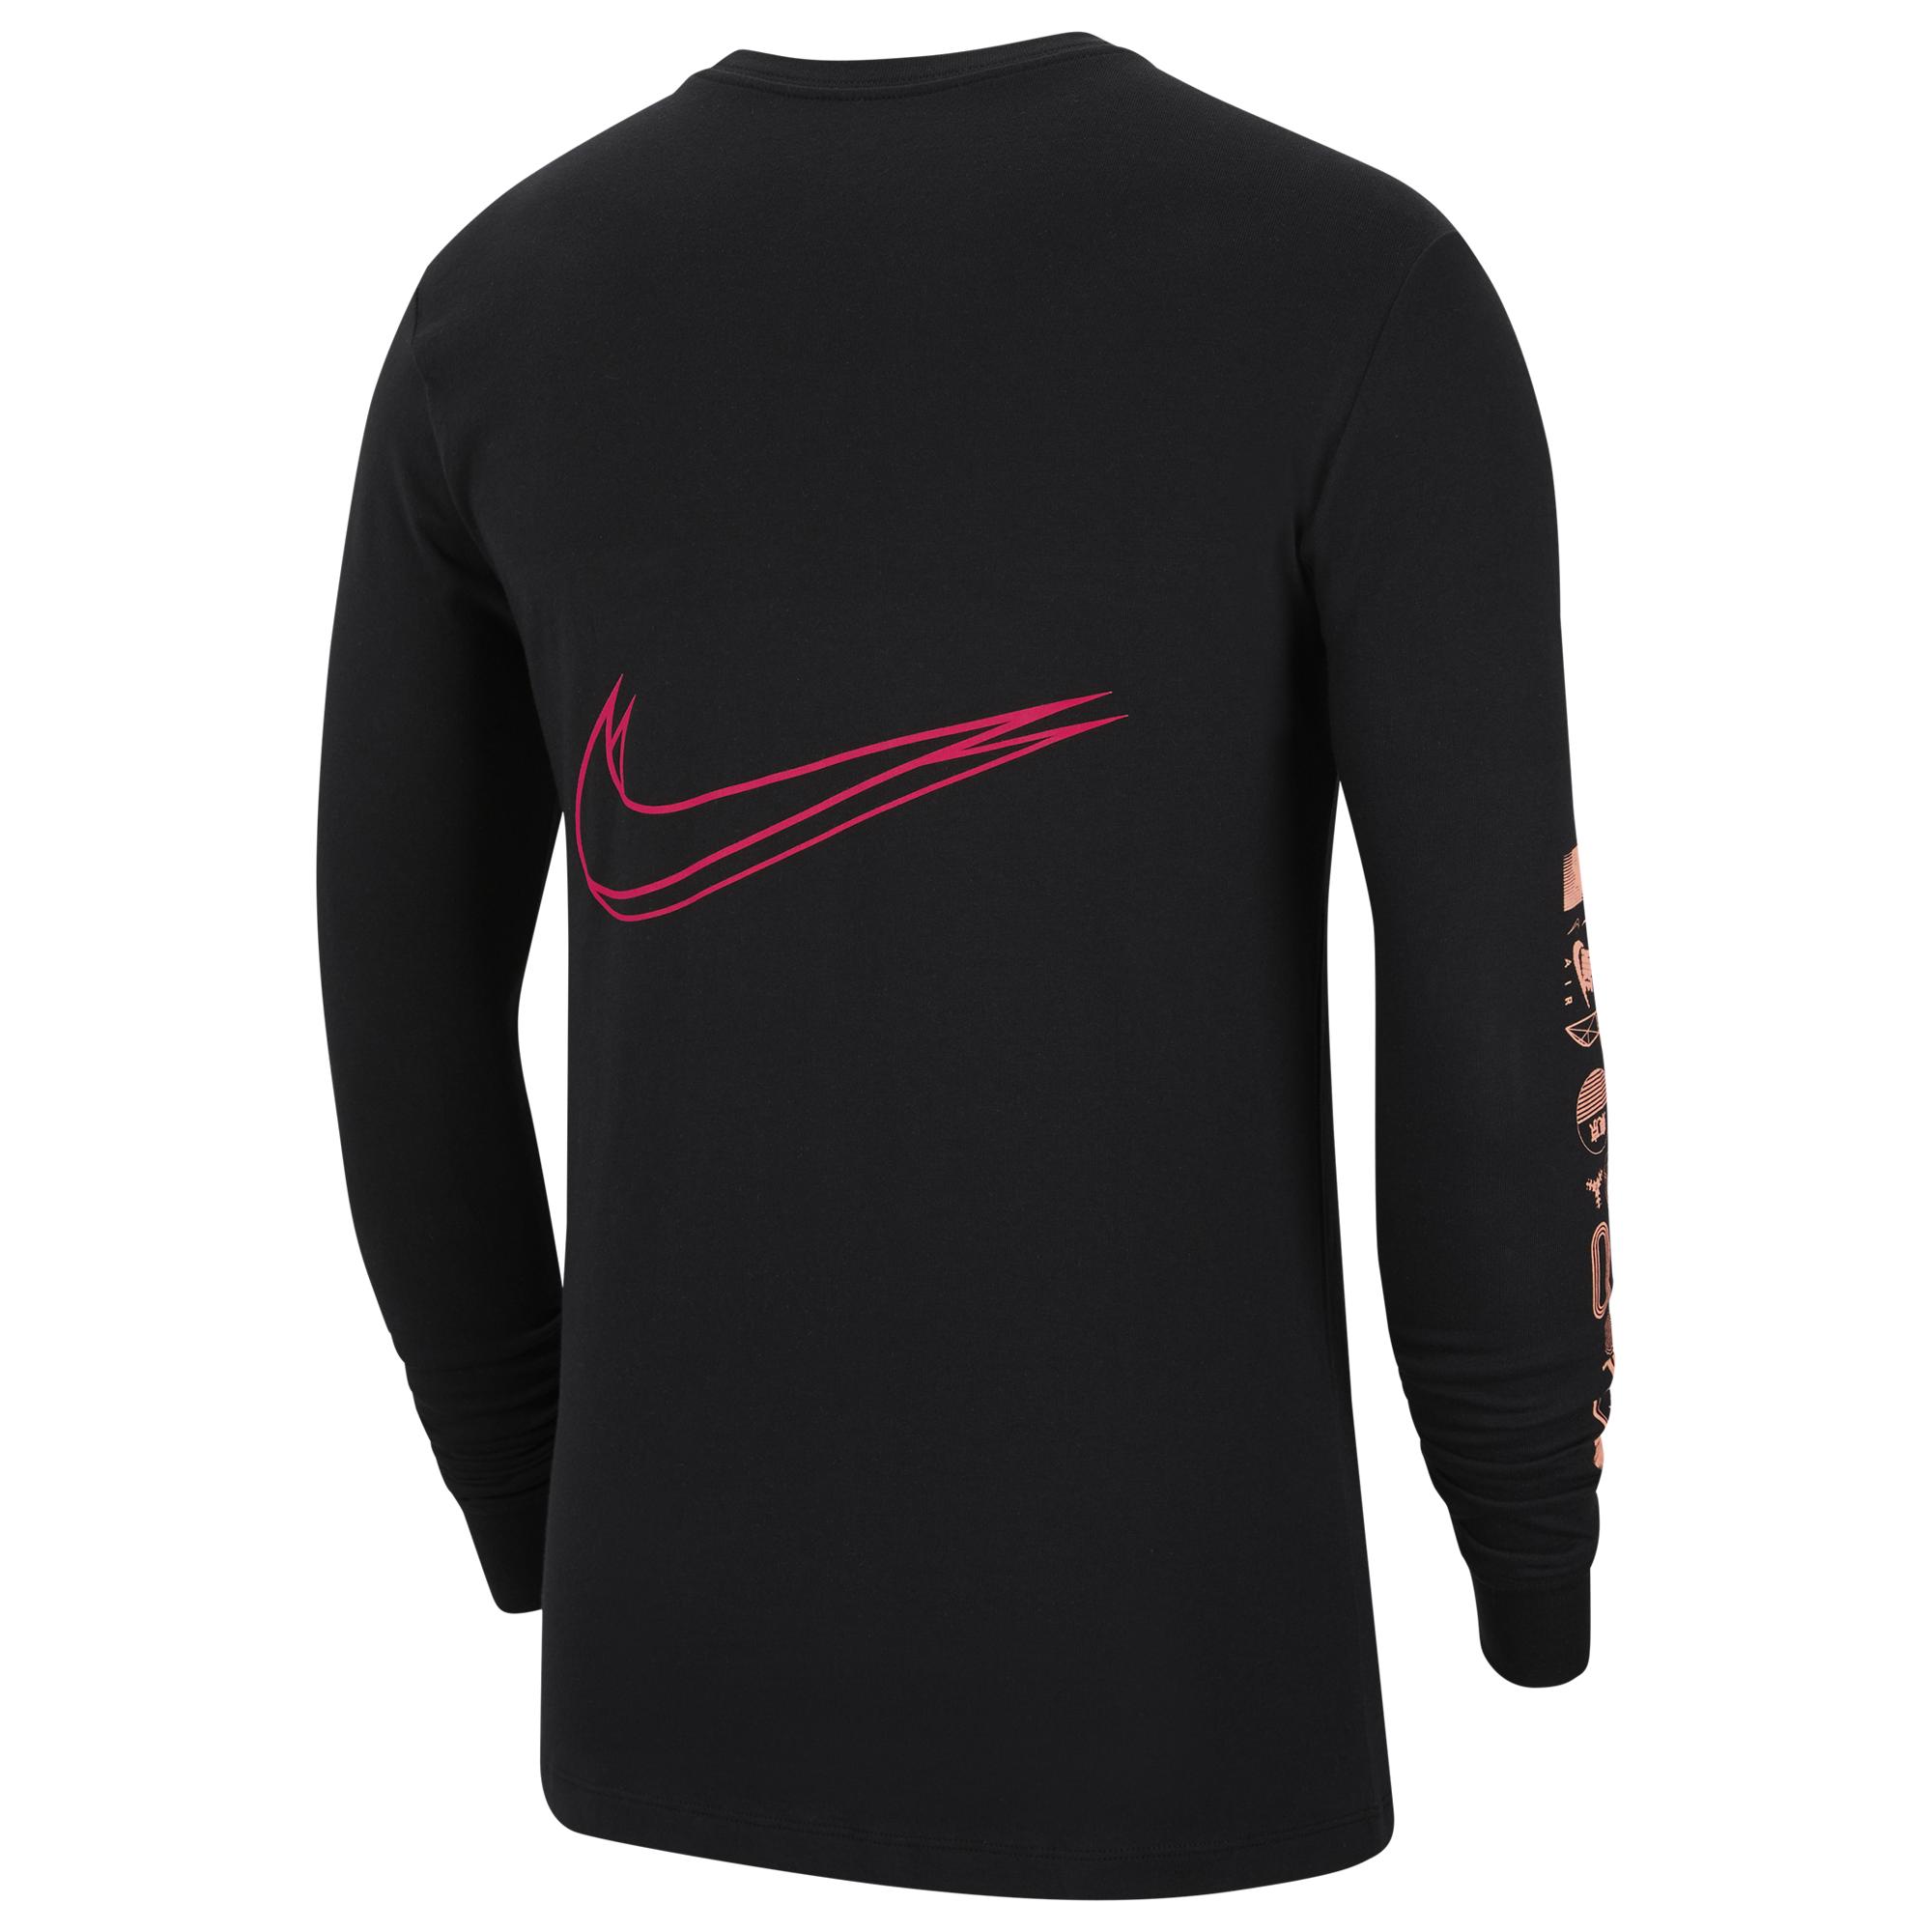 Nike Cotton Worldwide L/s T-shirt in Black/Pink (Black) for Men - Lyst